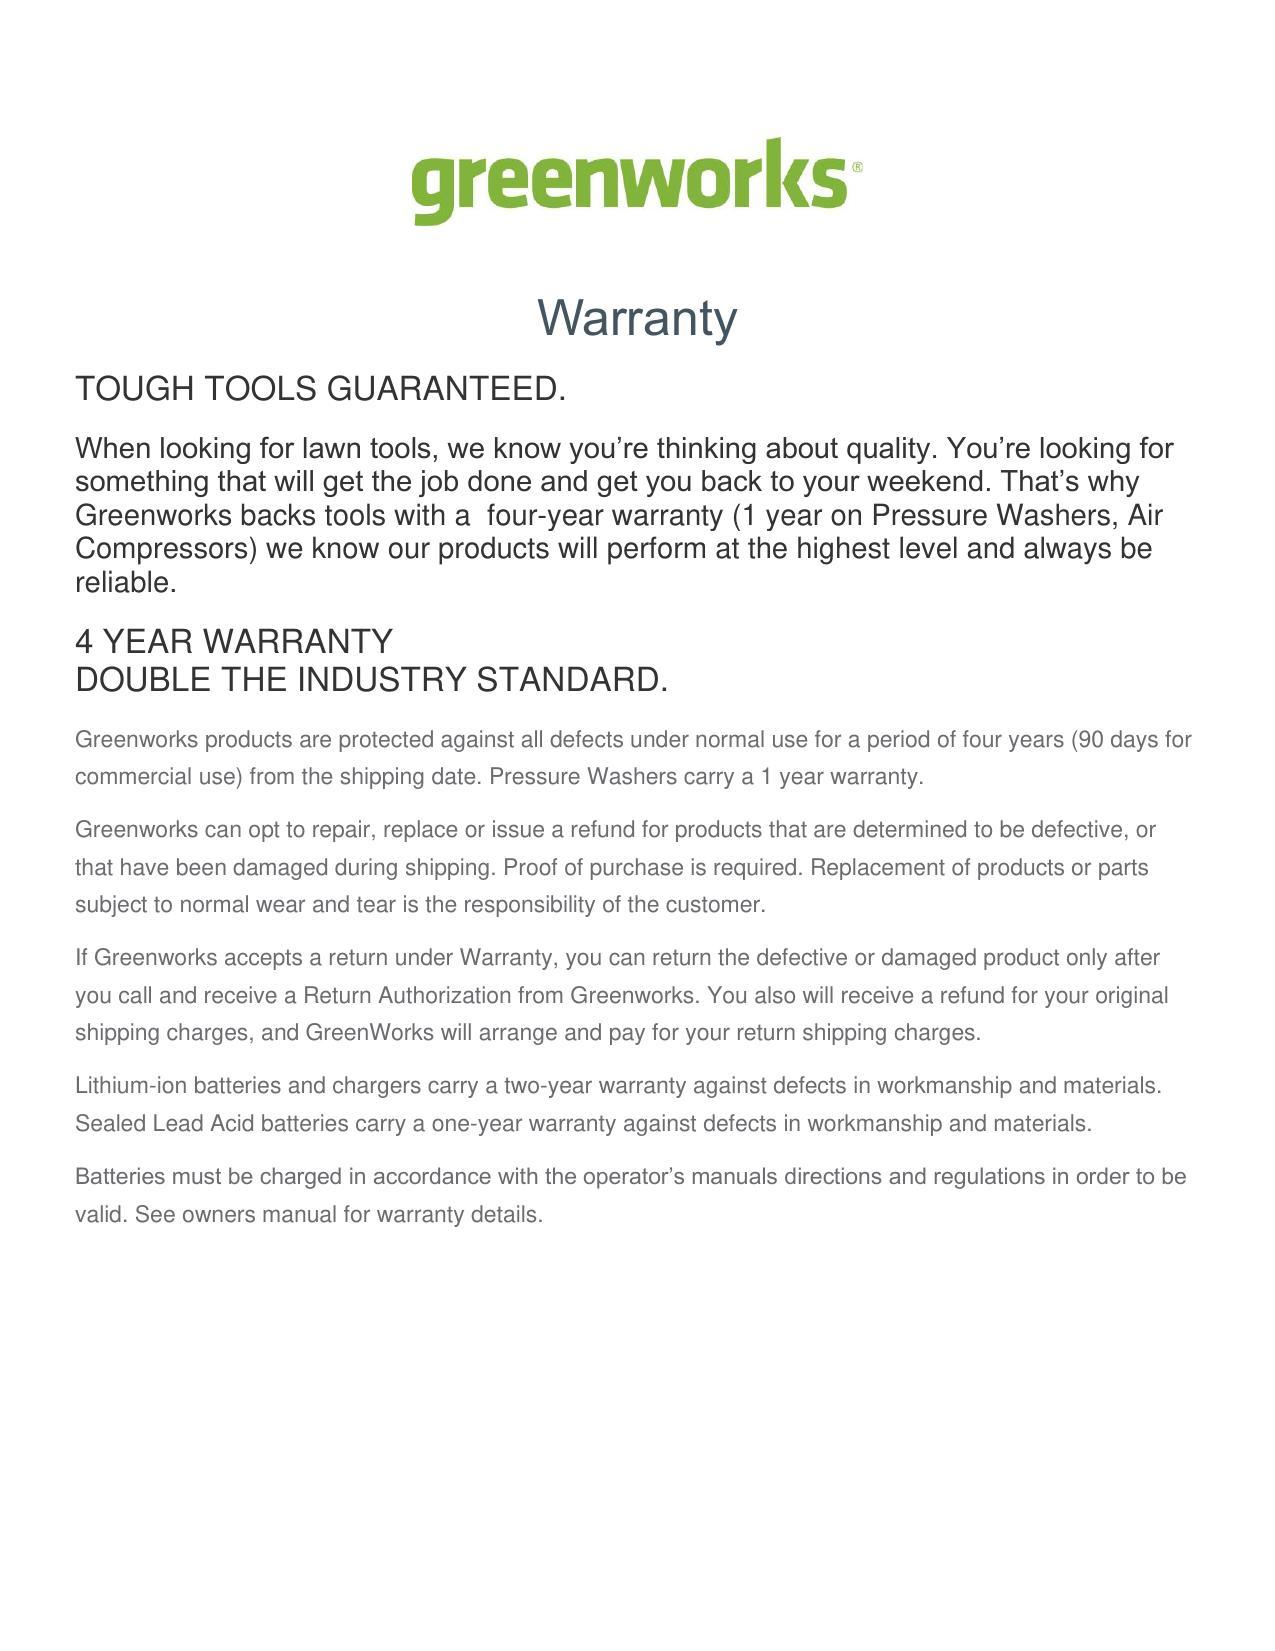 greenworks-warranty-and-user-manual.pdf